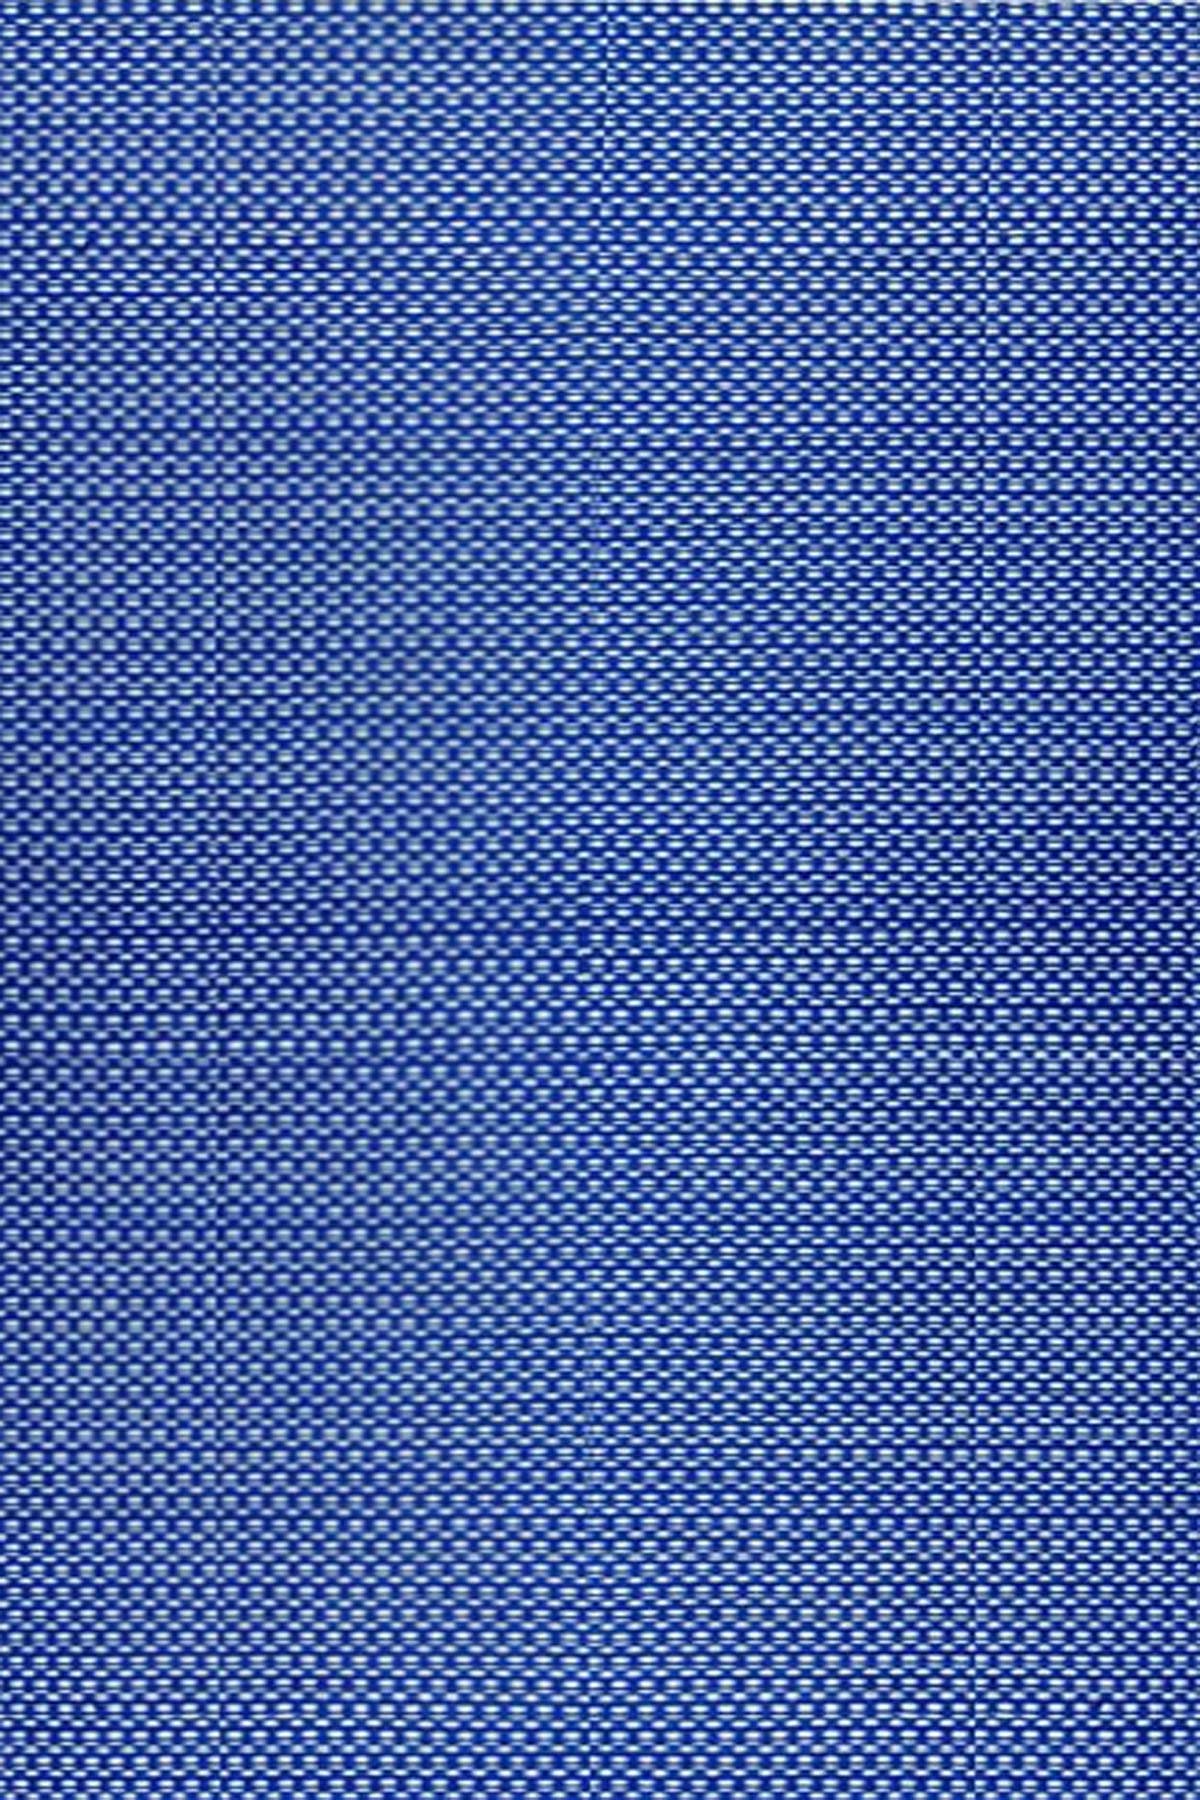 Mad Mats Casa Blanca 6' x 9' Indoor/Outdoor Area Rug in Blue/White